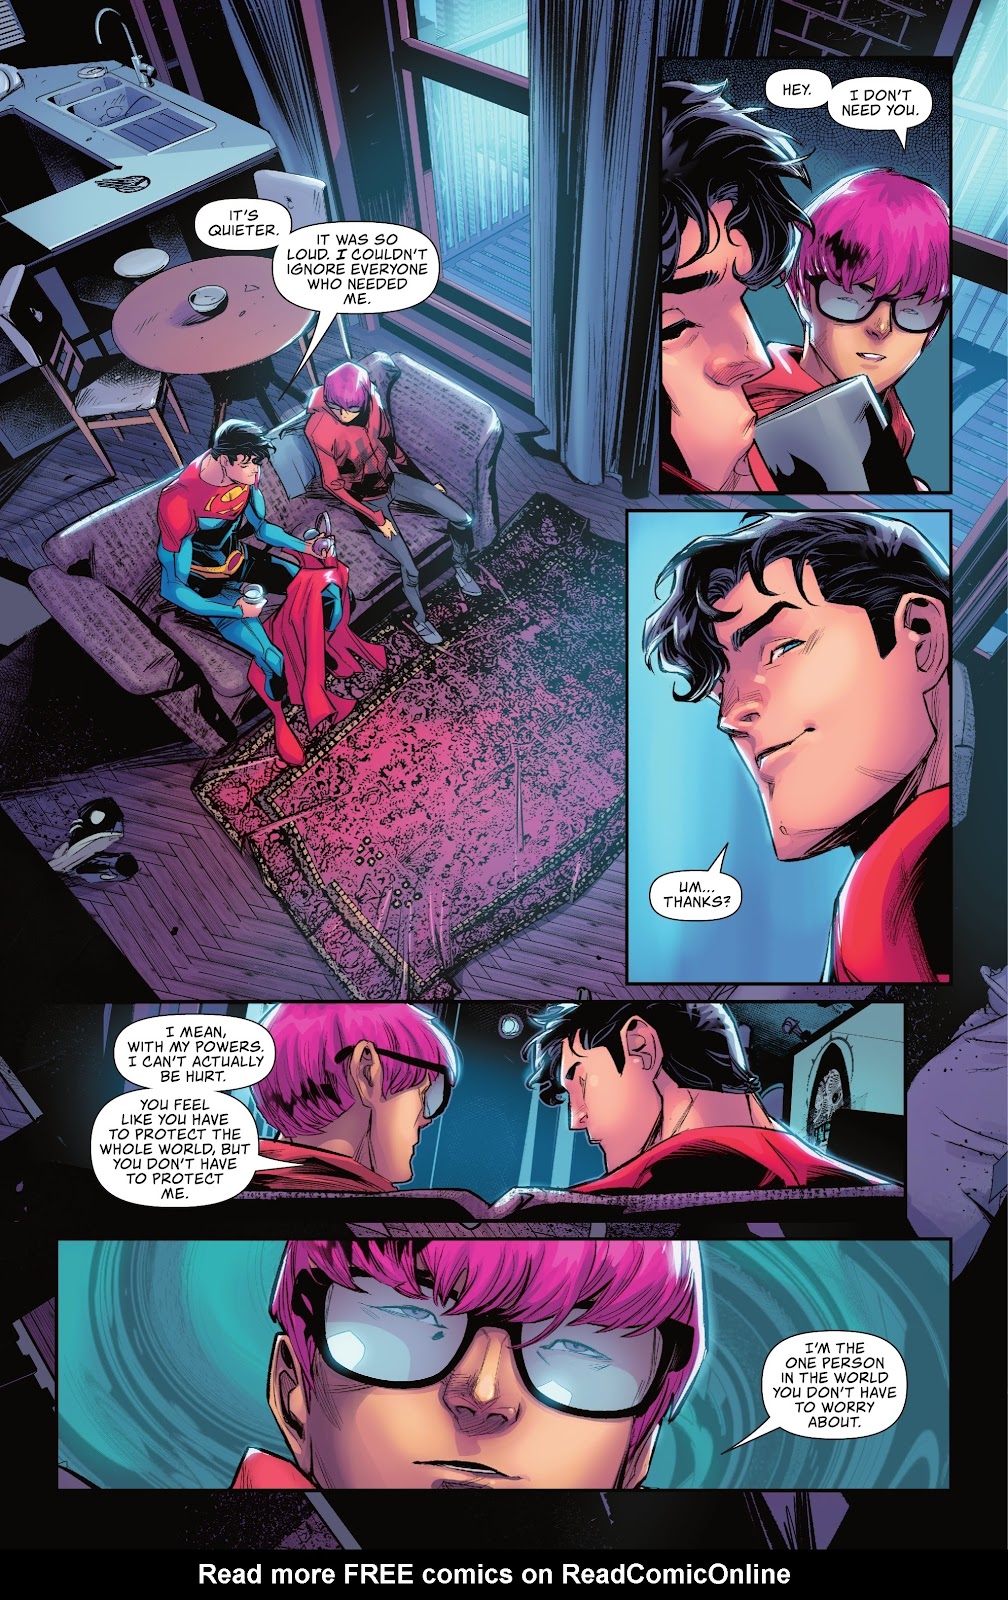 Superman: Revelado os poderes e história de Jay Nakamura, o